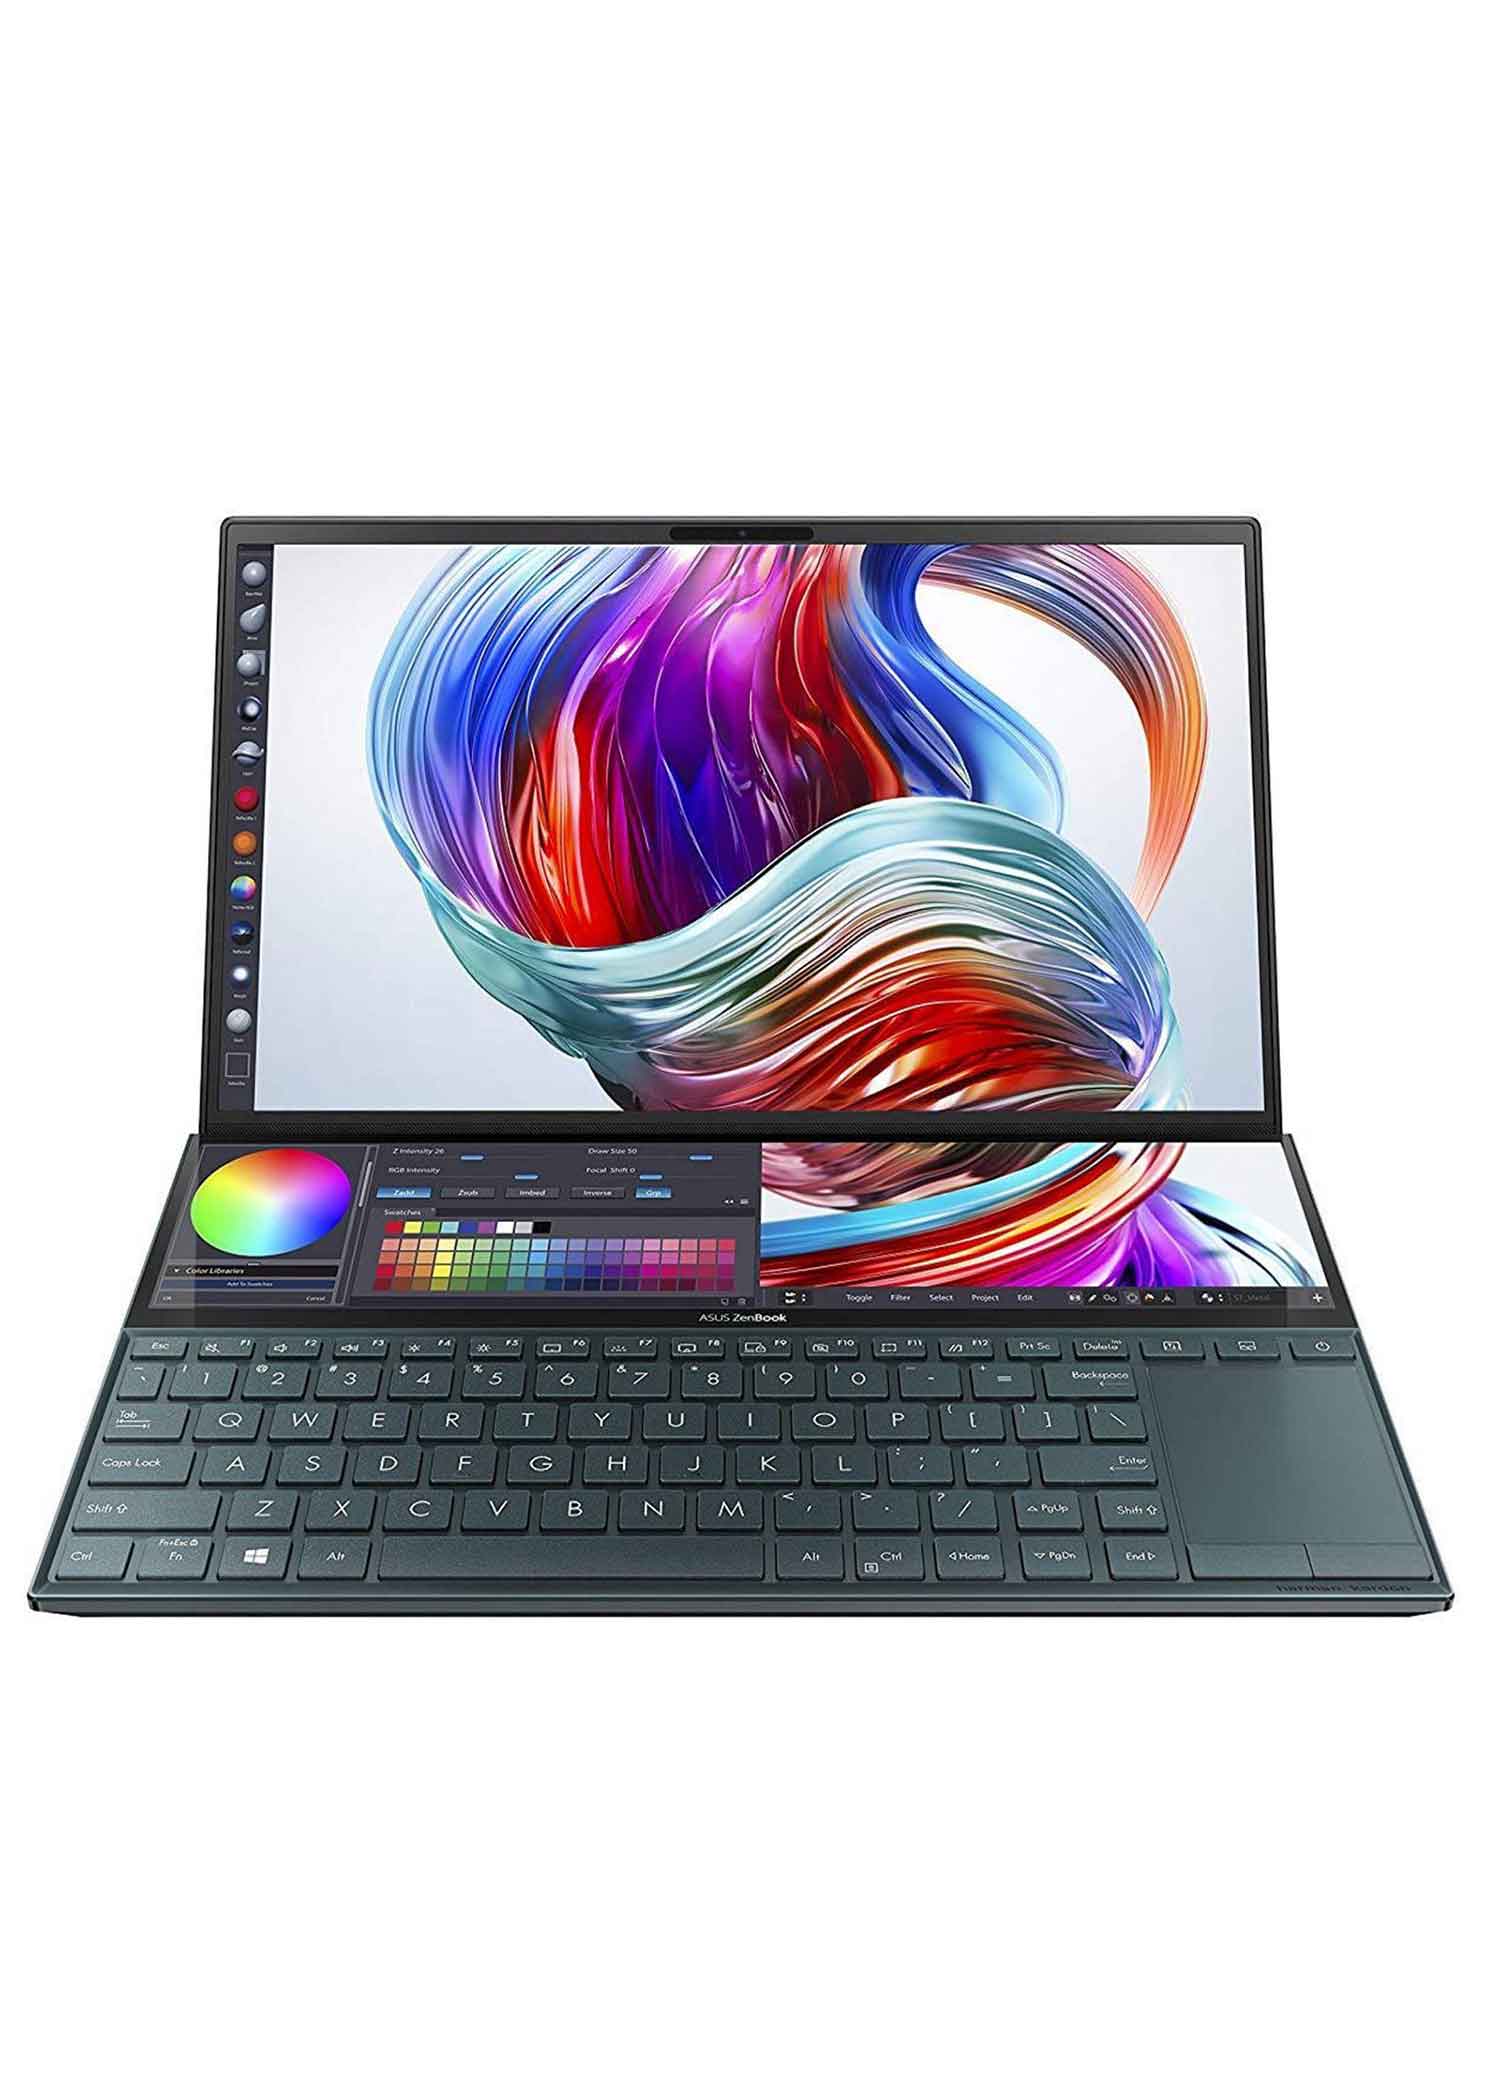 قیمت و خرید لپ تاپ ایسوس ZenBook UX481F - آی تی کاشفی